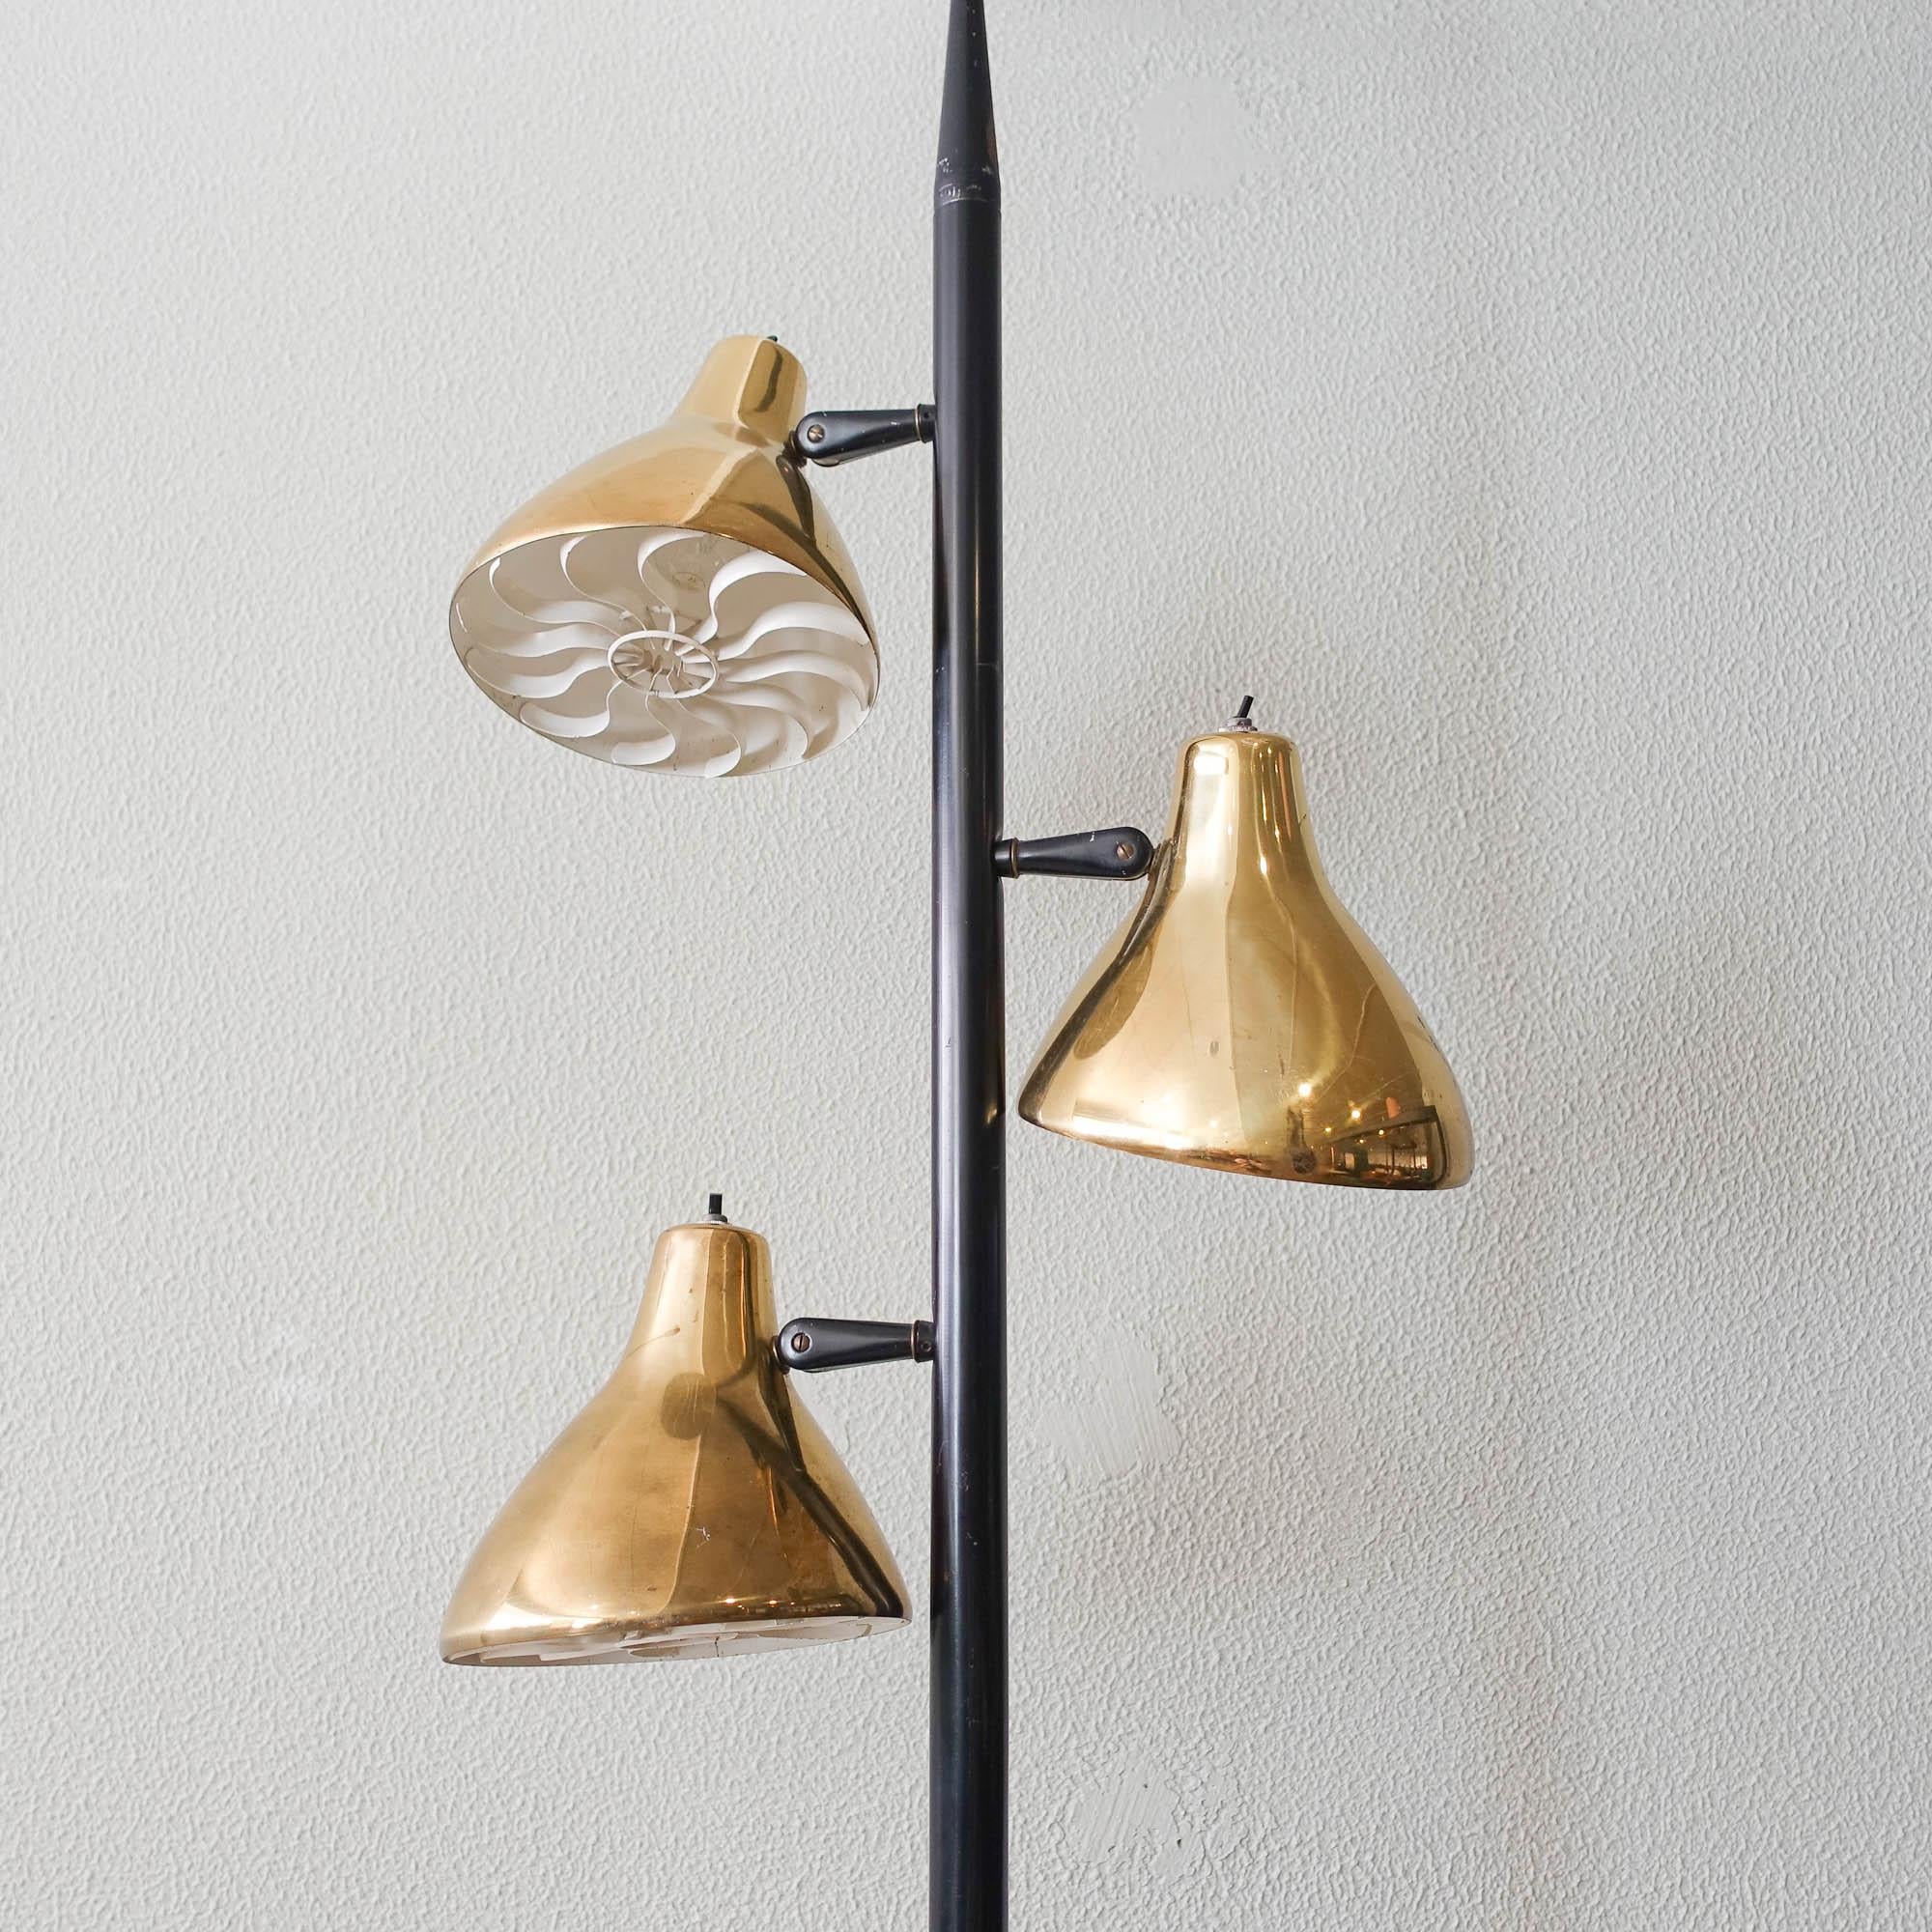 Mid-20th Century Midcentury Adjustable Tension Floor Pole Lamp by Gerald Thurston for Lightolier